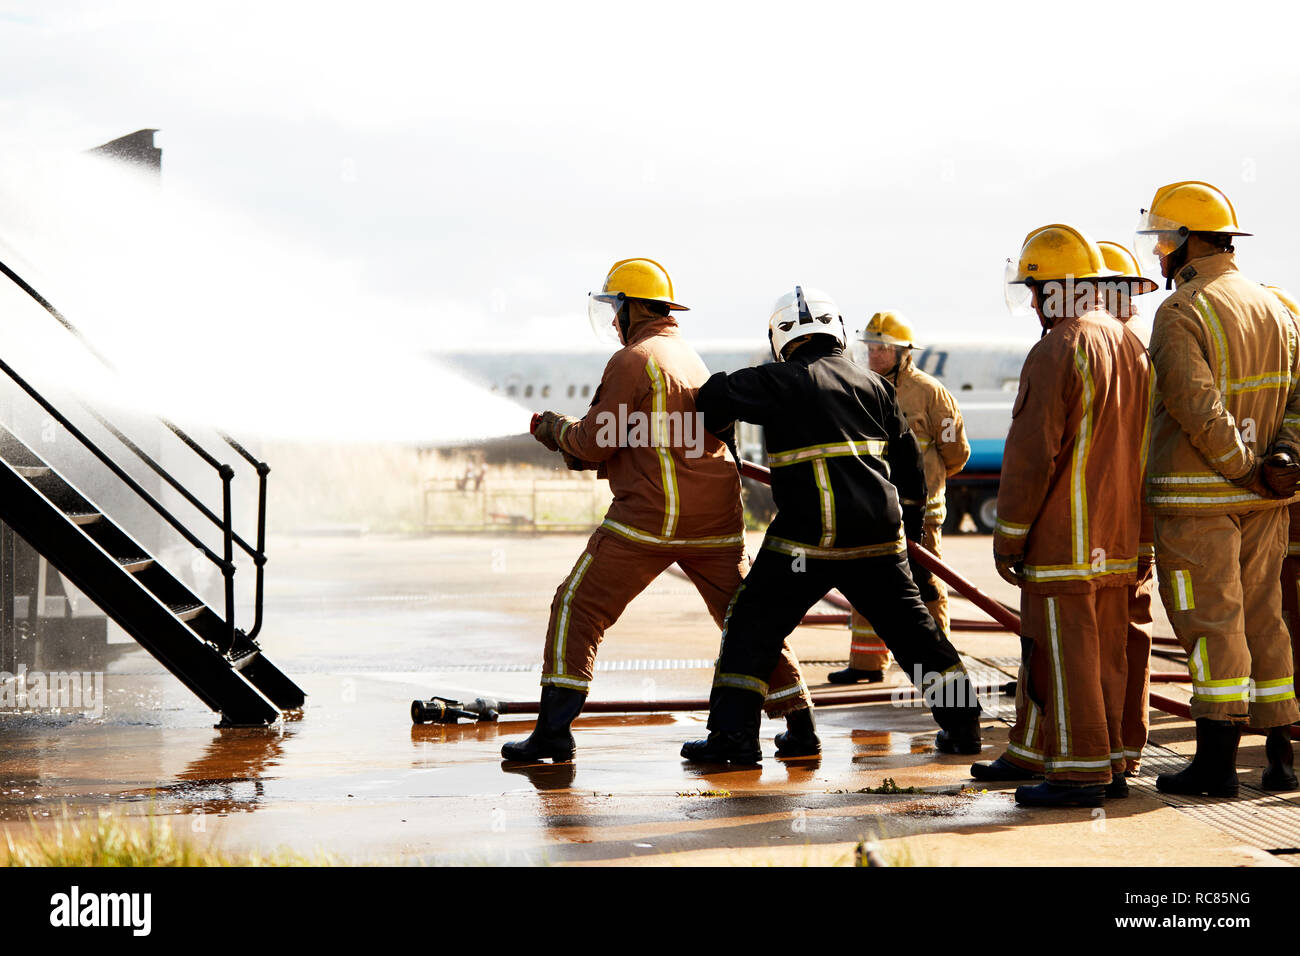 Firemen training, firemen spraying water at training facility Stock Photo